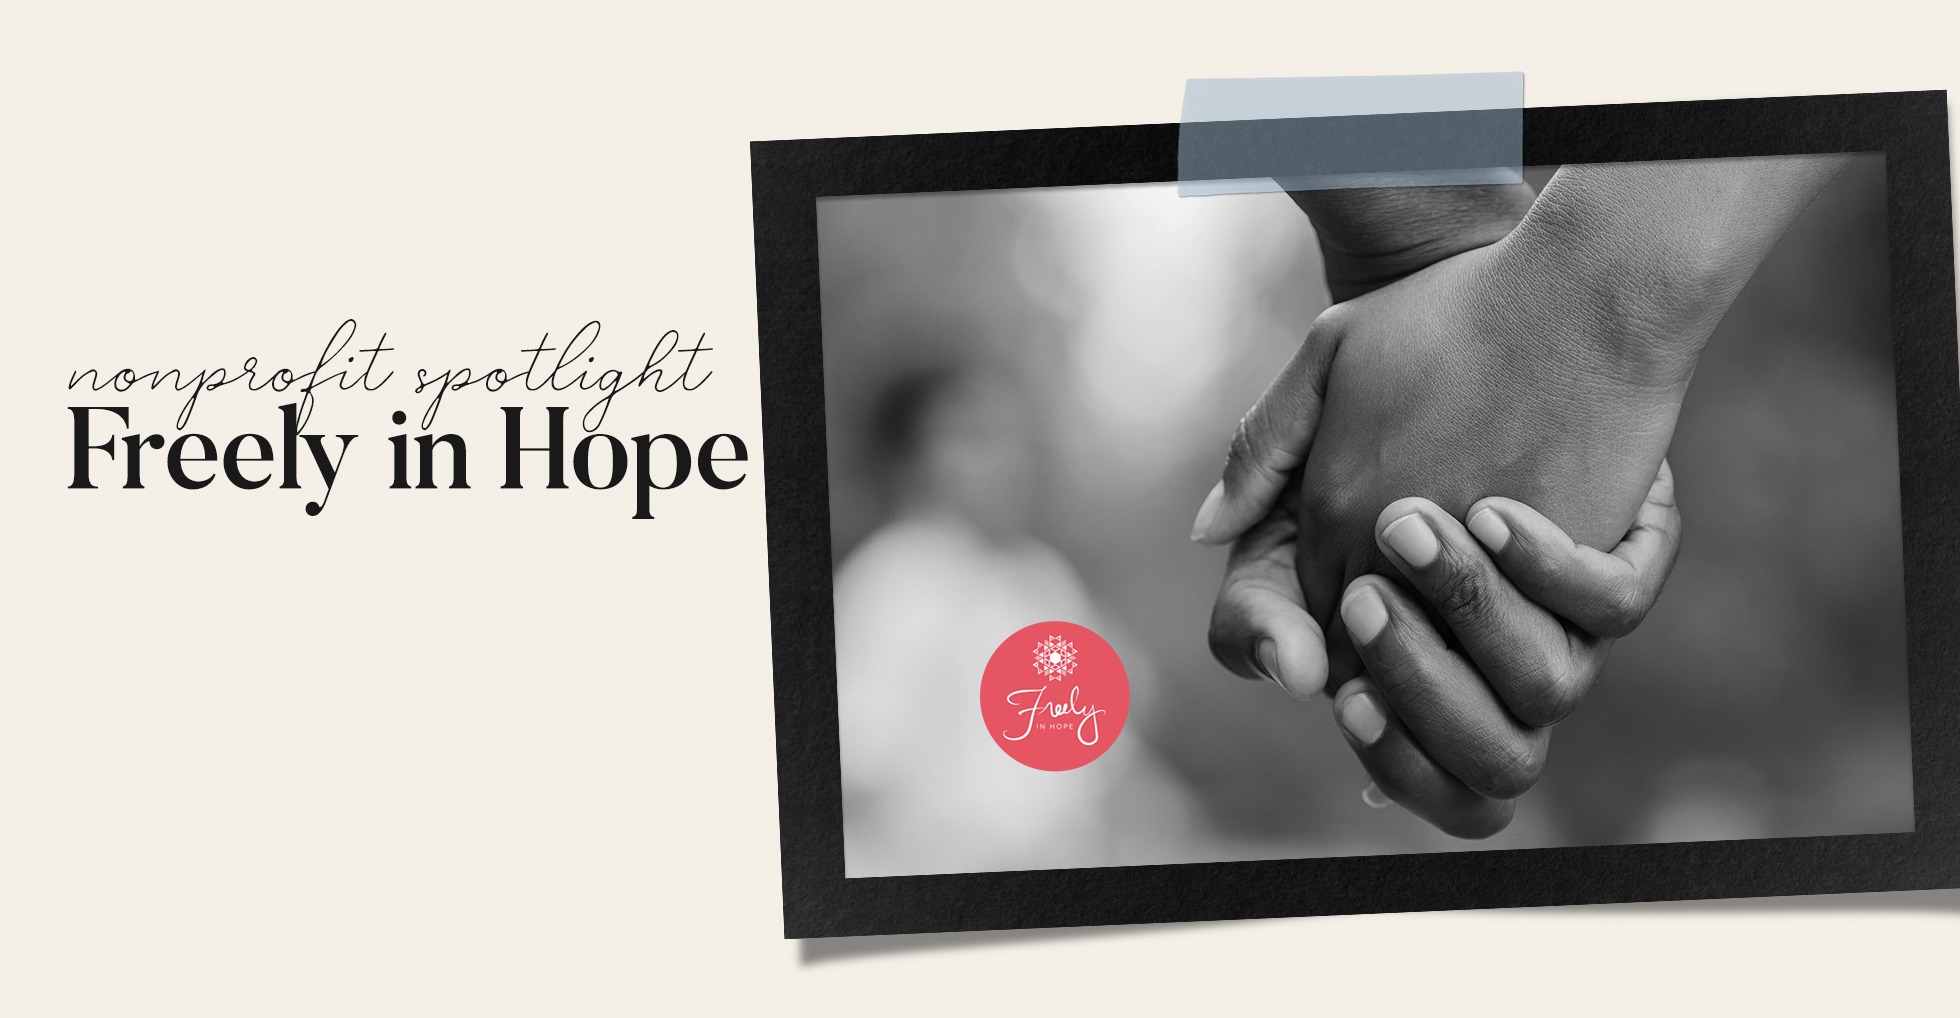 Freely in Hope Nonprofit Spotlight